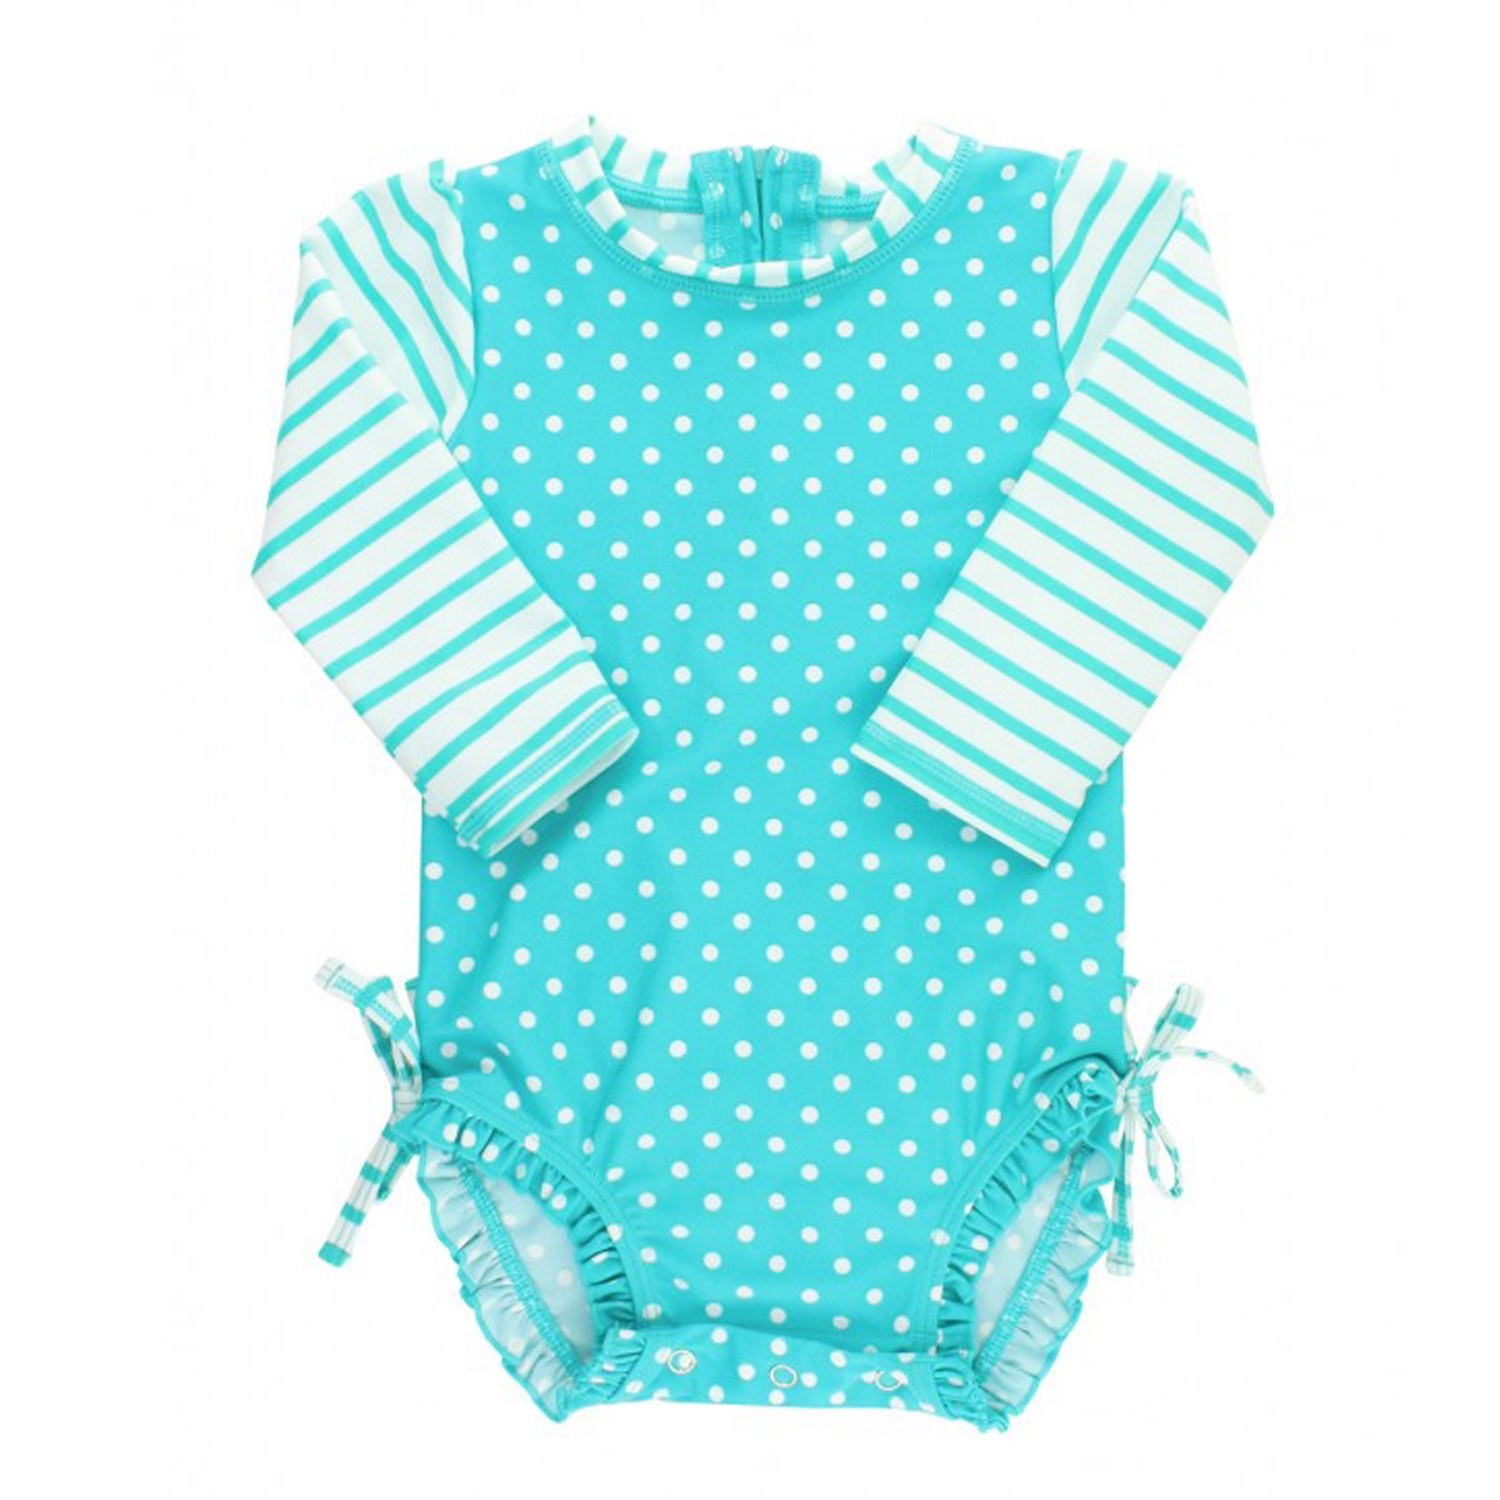 Ruffle Butts Aqua Polka Dot and Stripe 1 pc. Rash Guard Swim Suit